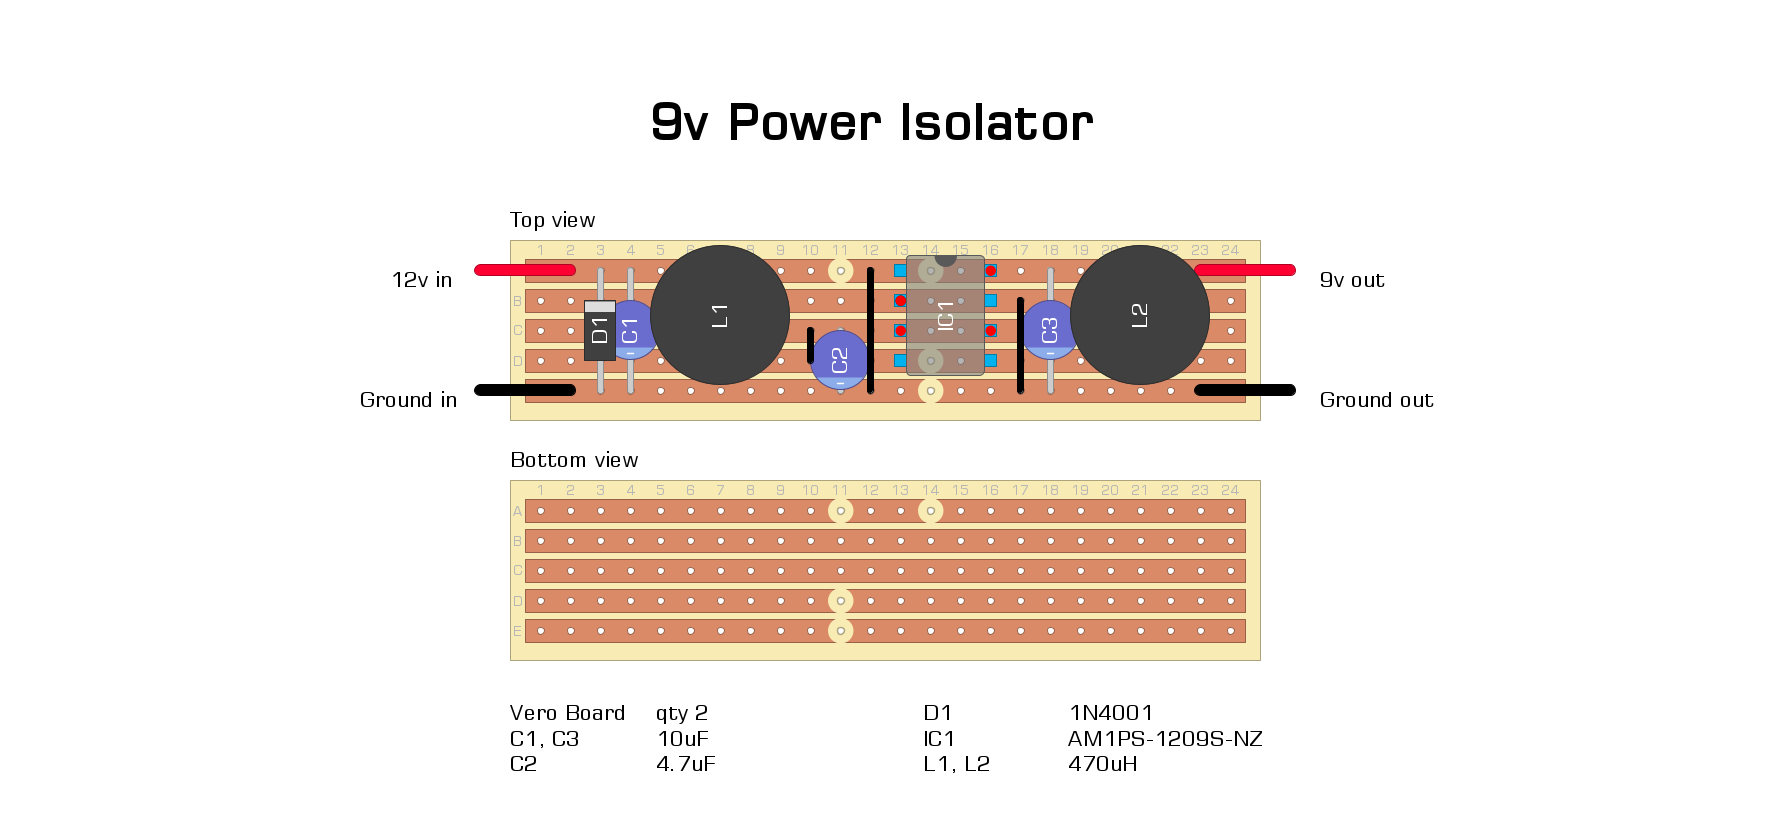 9v power isolator